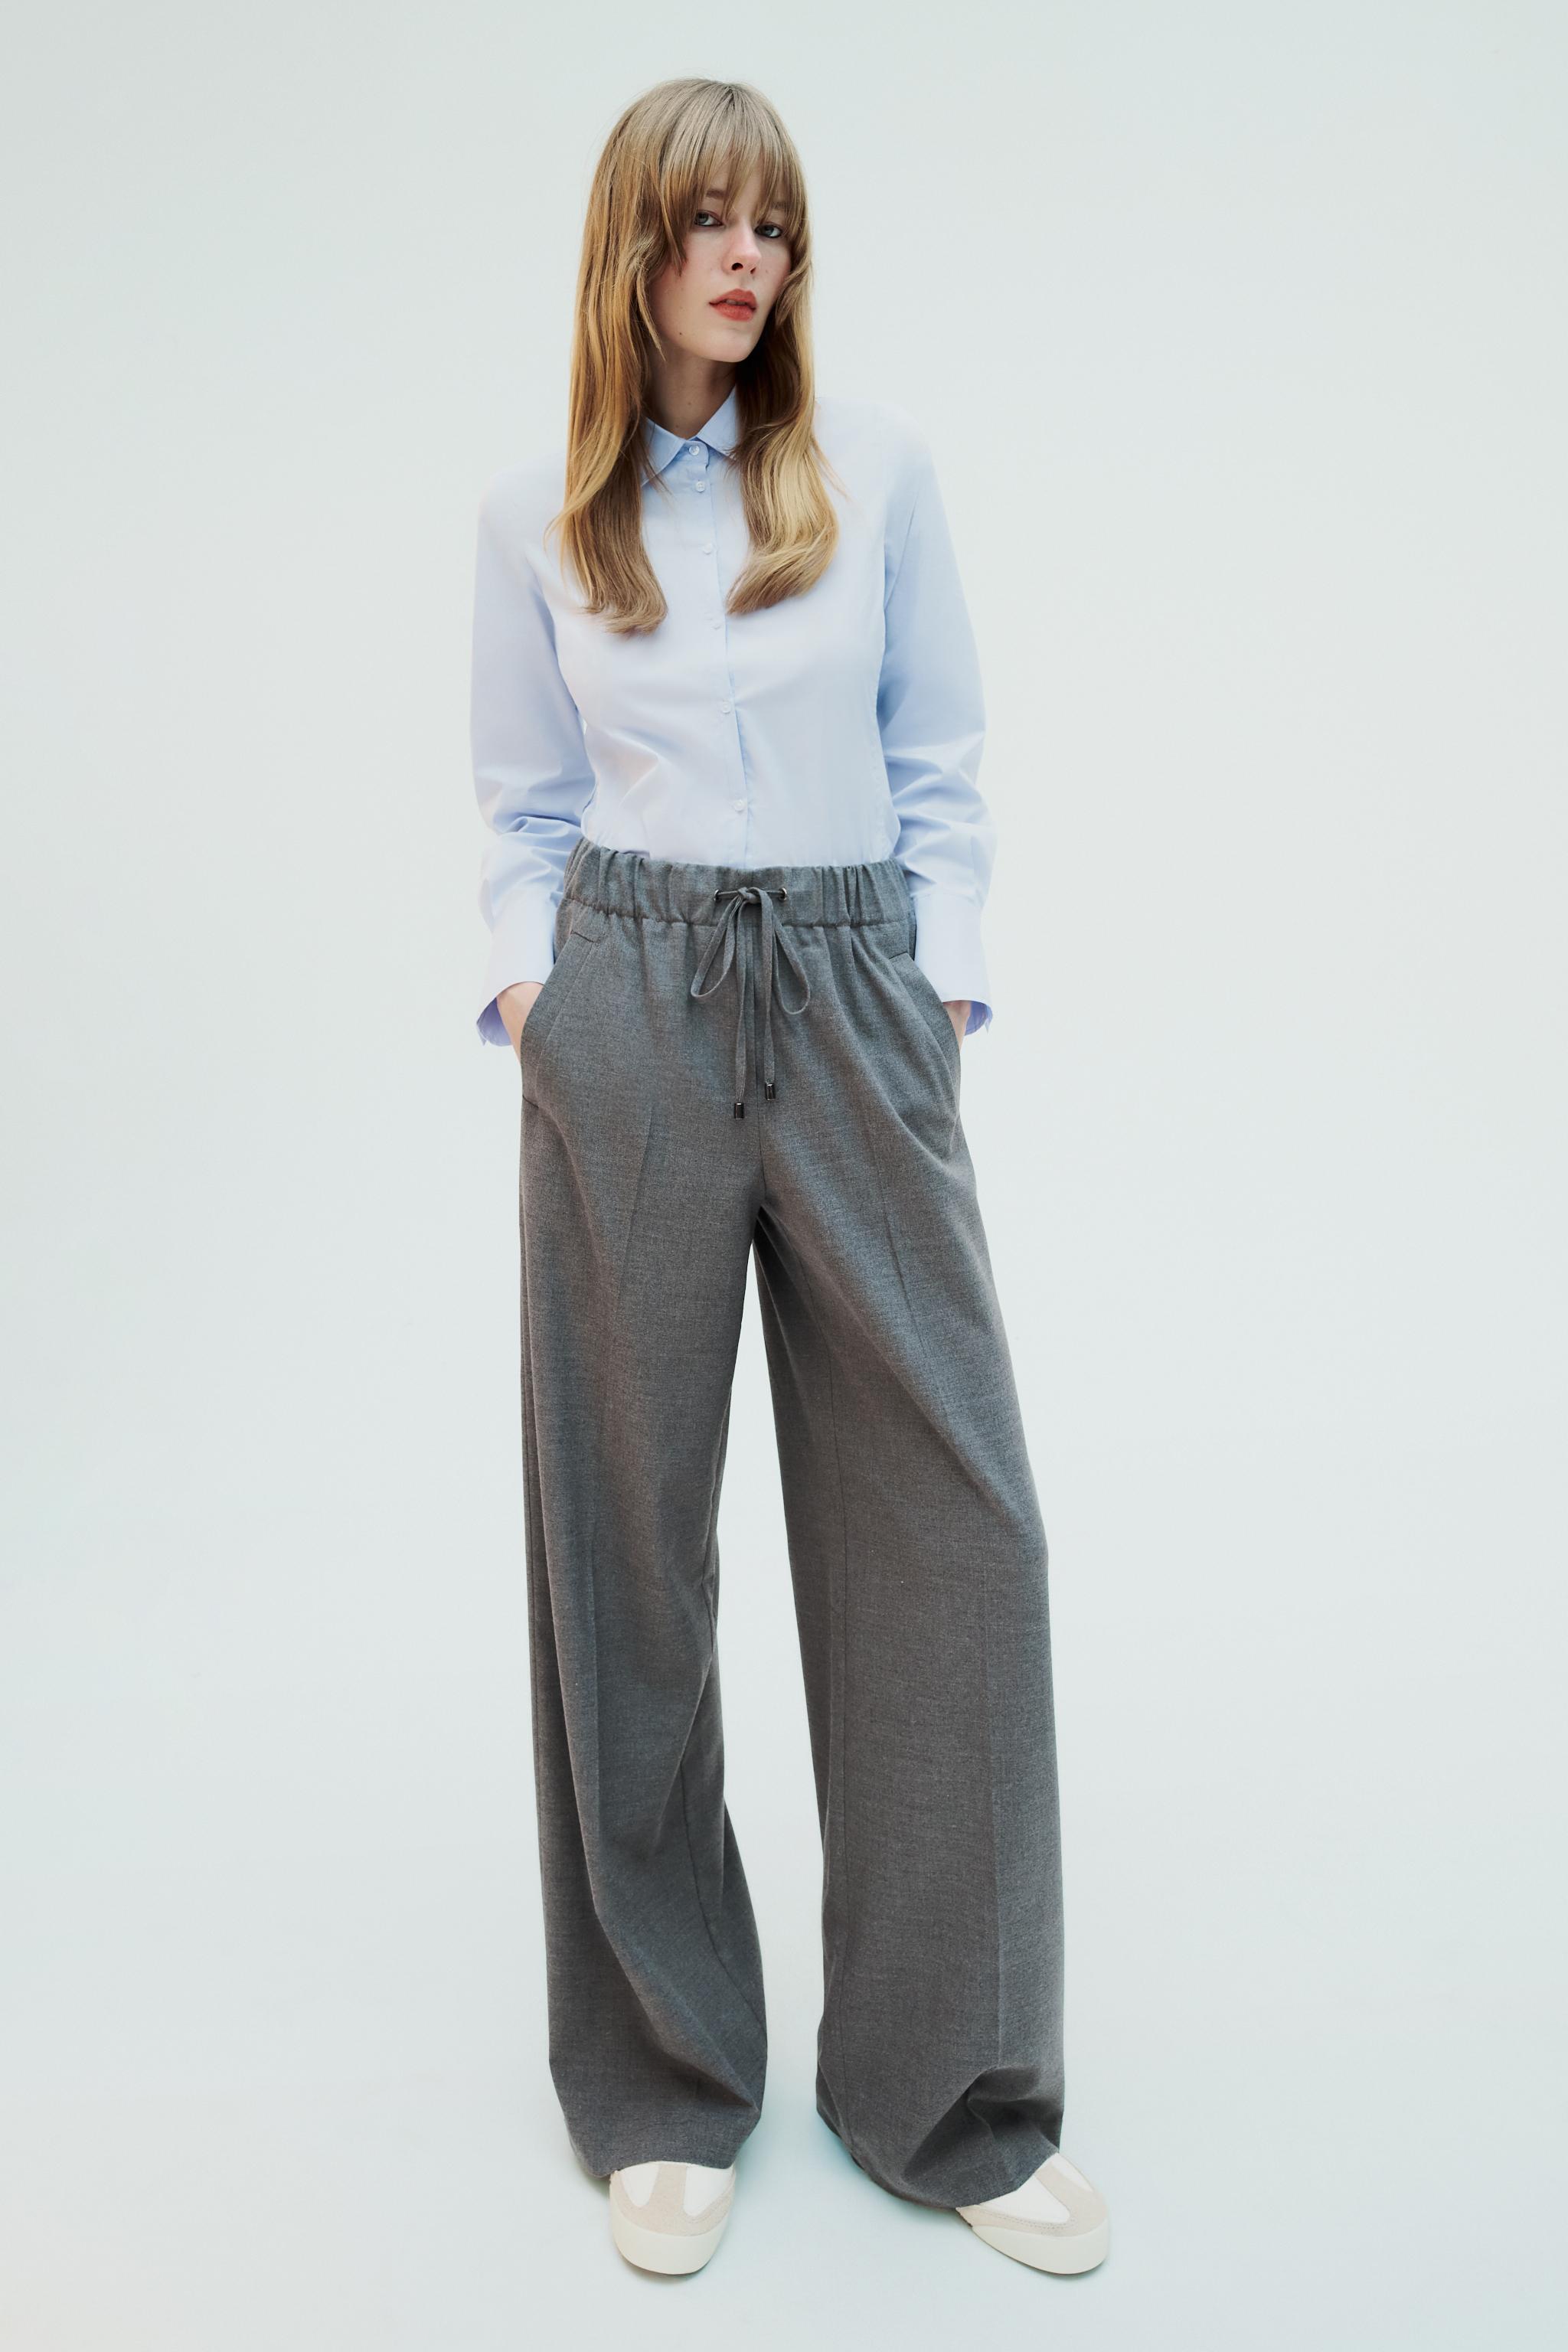 Zara High-waisted pants made of linen. Adjustable elastic